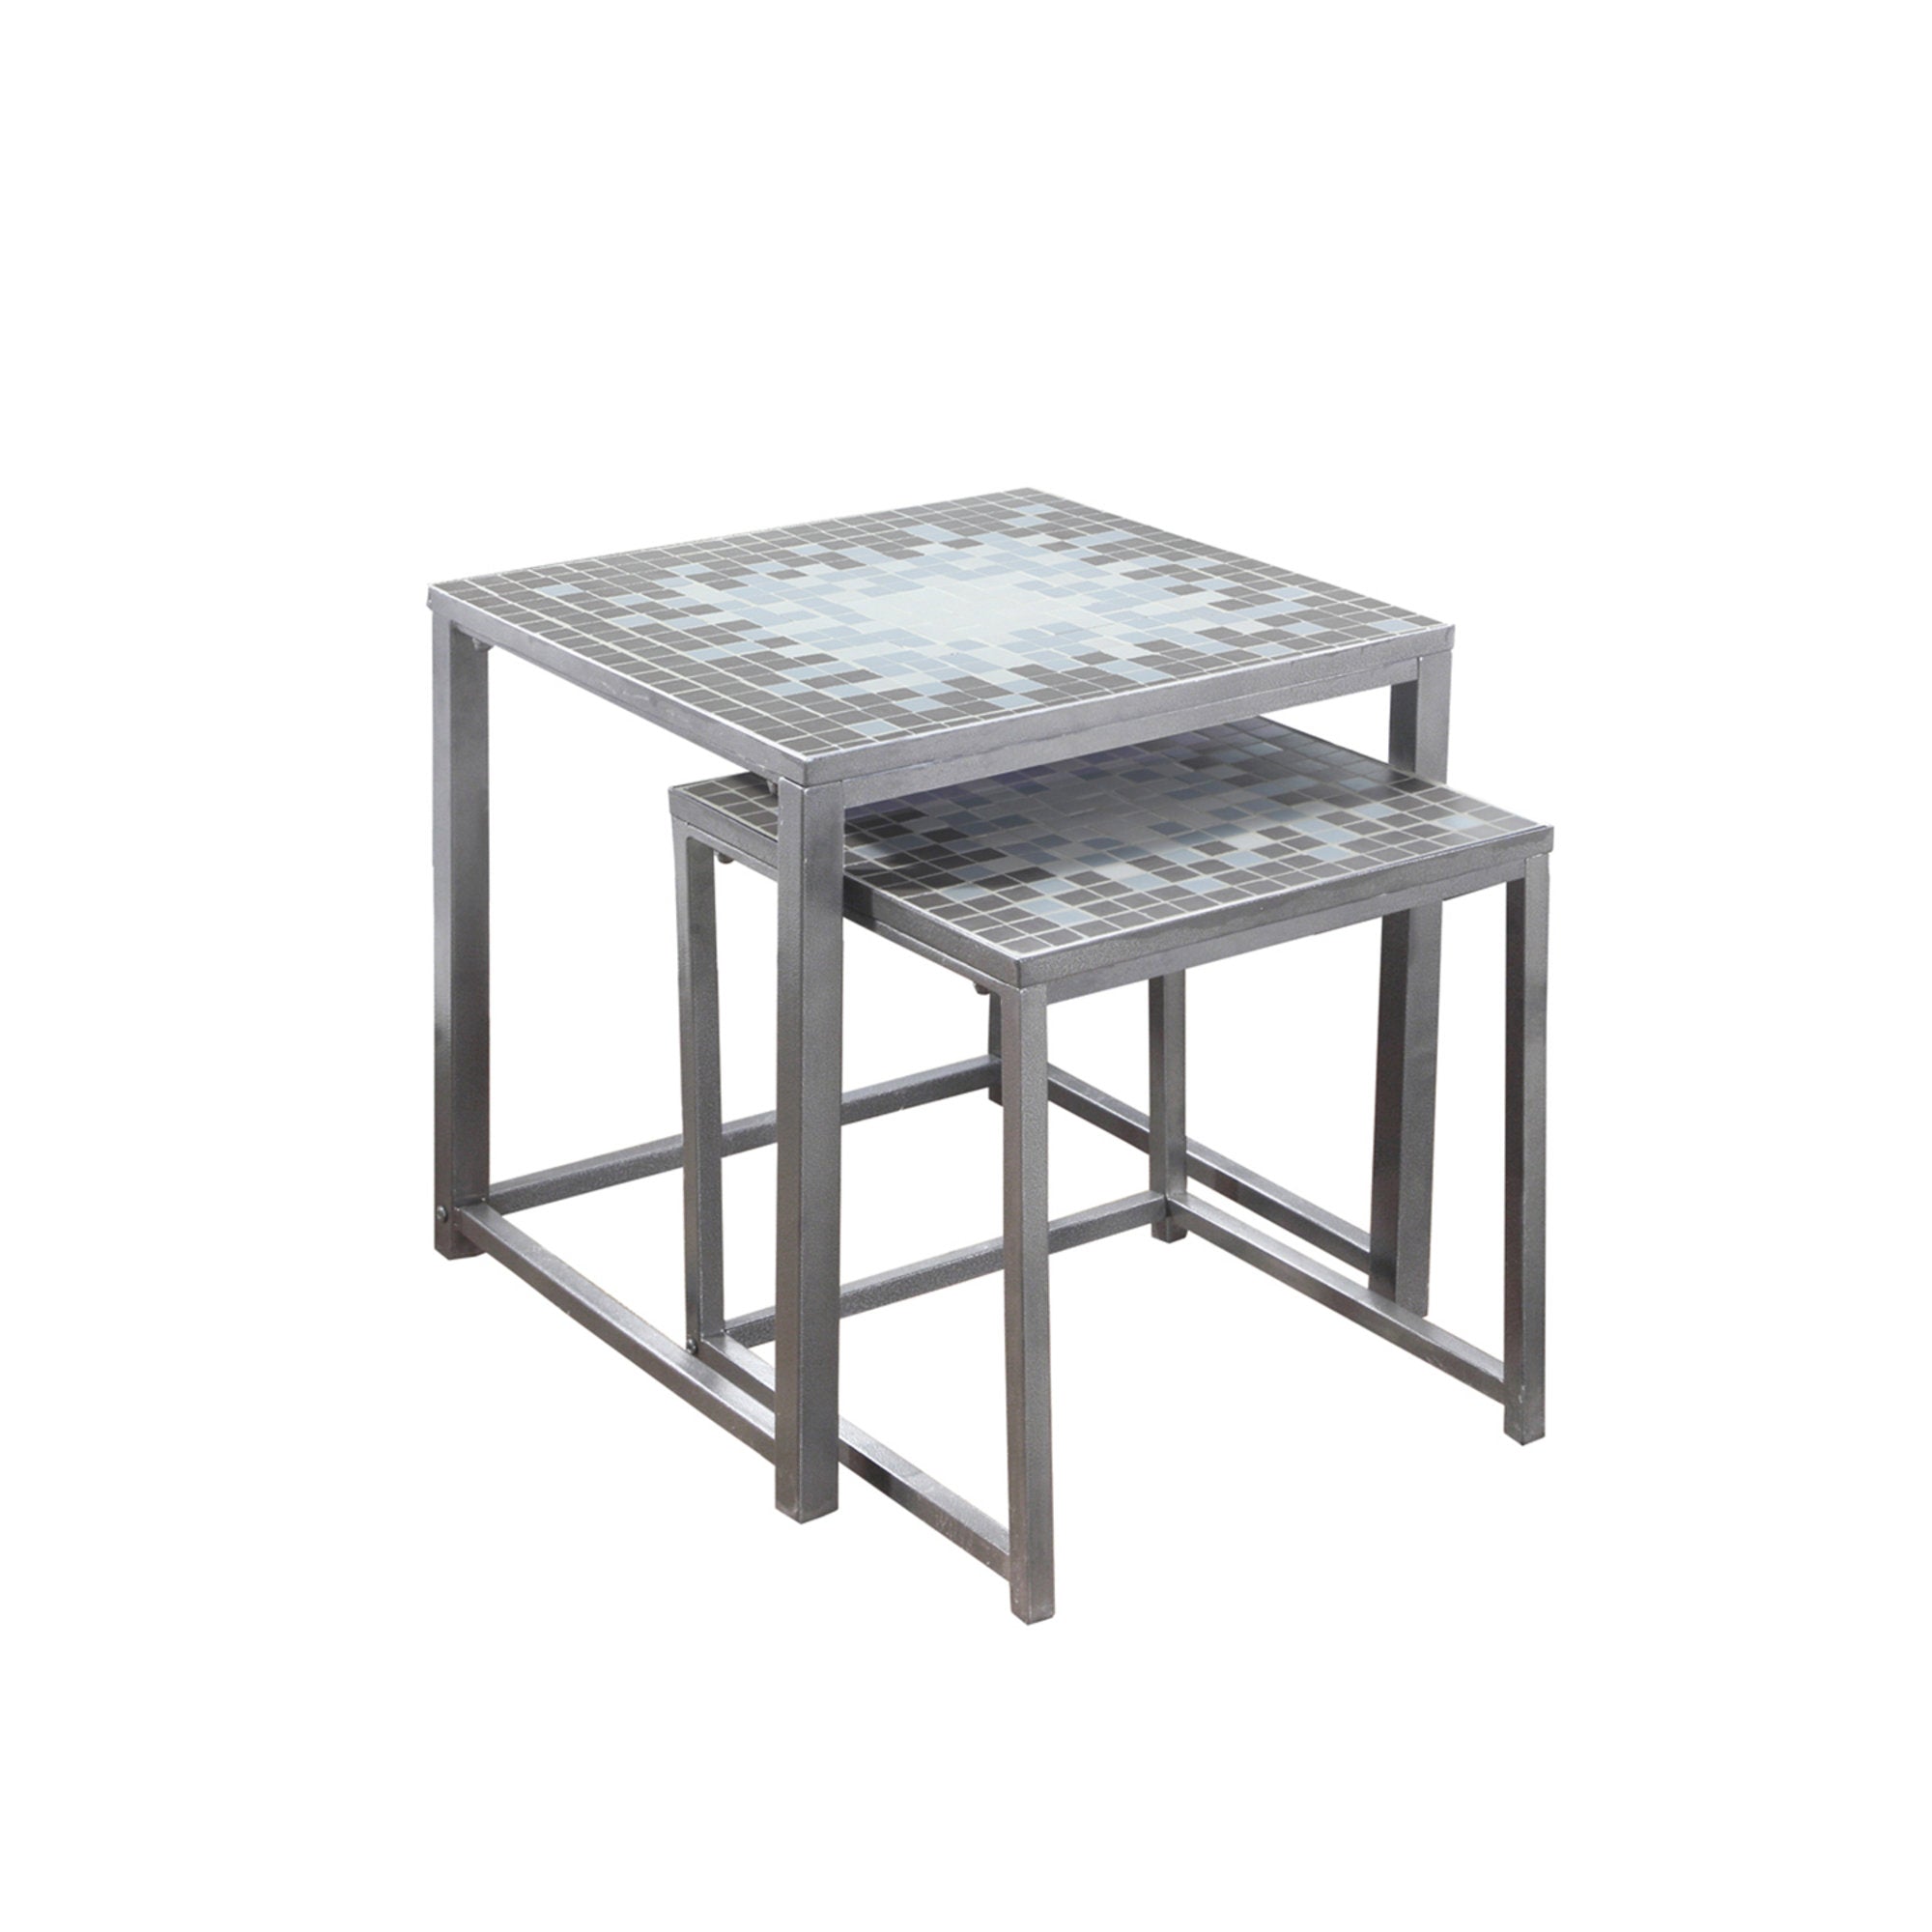 MN-453141    Nesting Table, Set Of 2, Side, End, Metal, Accent, Living Room, Bedroom, Metal Base, Tile, Blue, Silver, Transitional